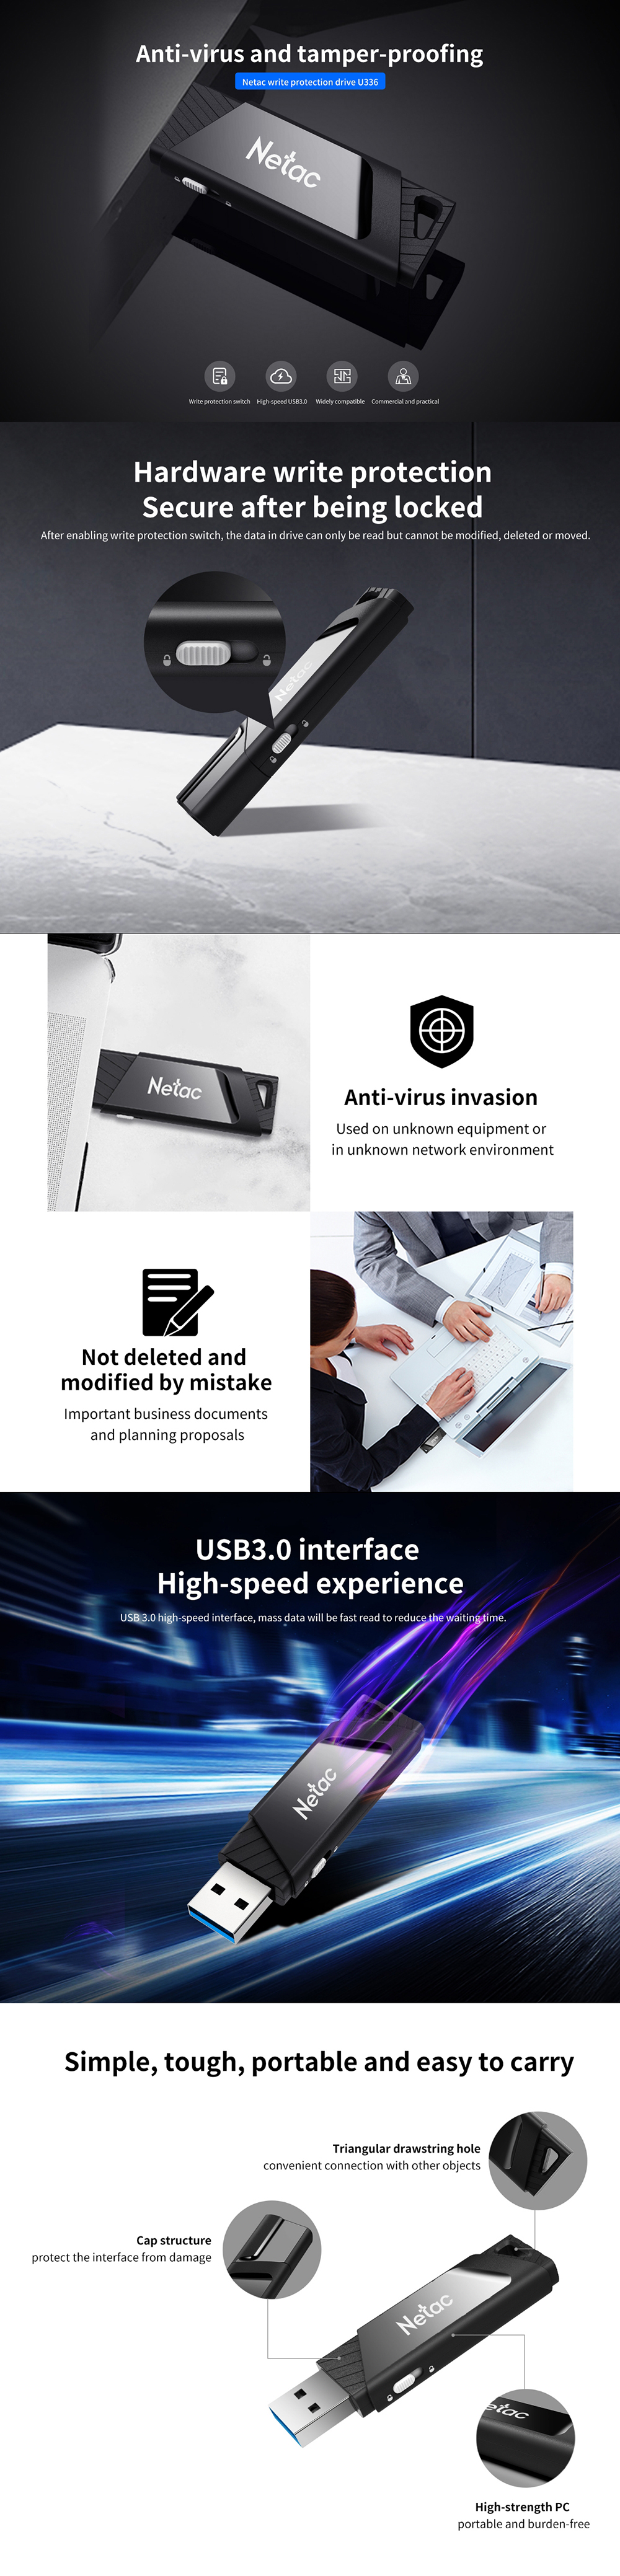 Netac-U336-64G-USB30-Flash-Drive-16G-32G-Pendrive-USB-Memory-Disk-with-Write-Protect-Switch-Thumb-Dr-1888079-1